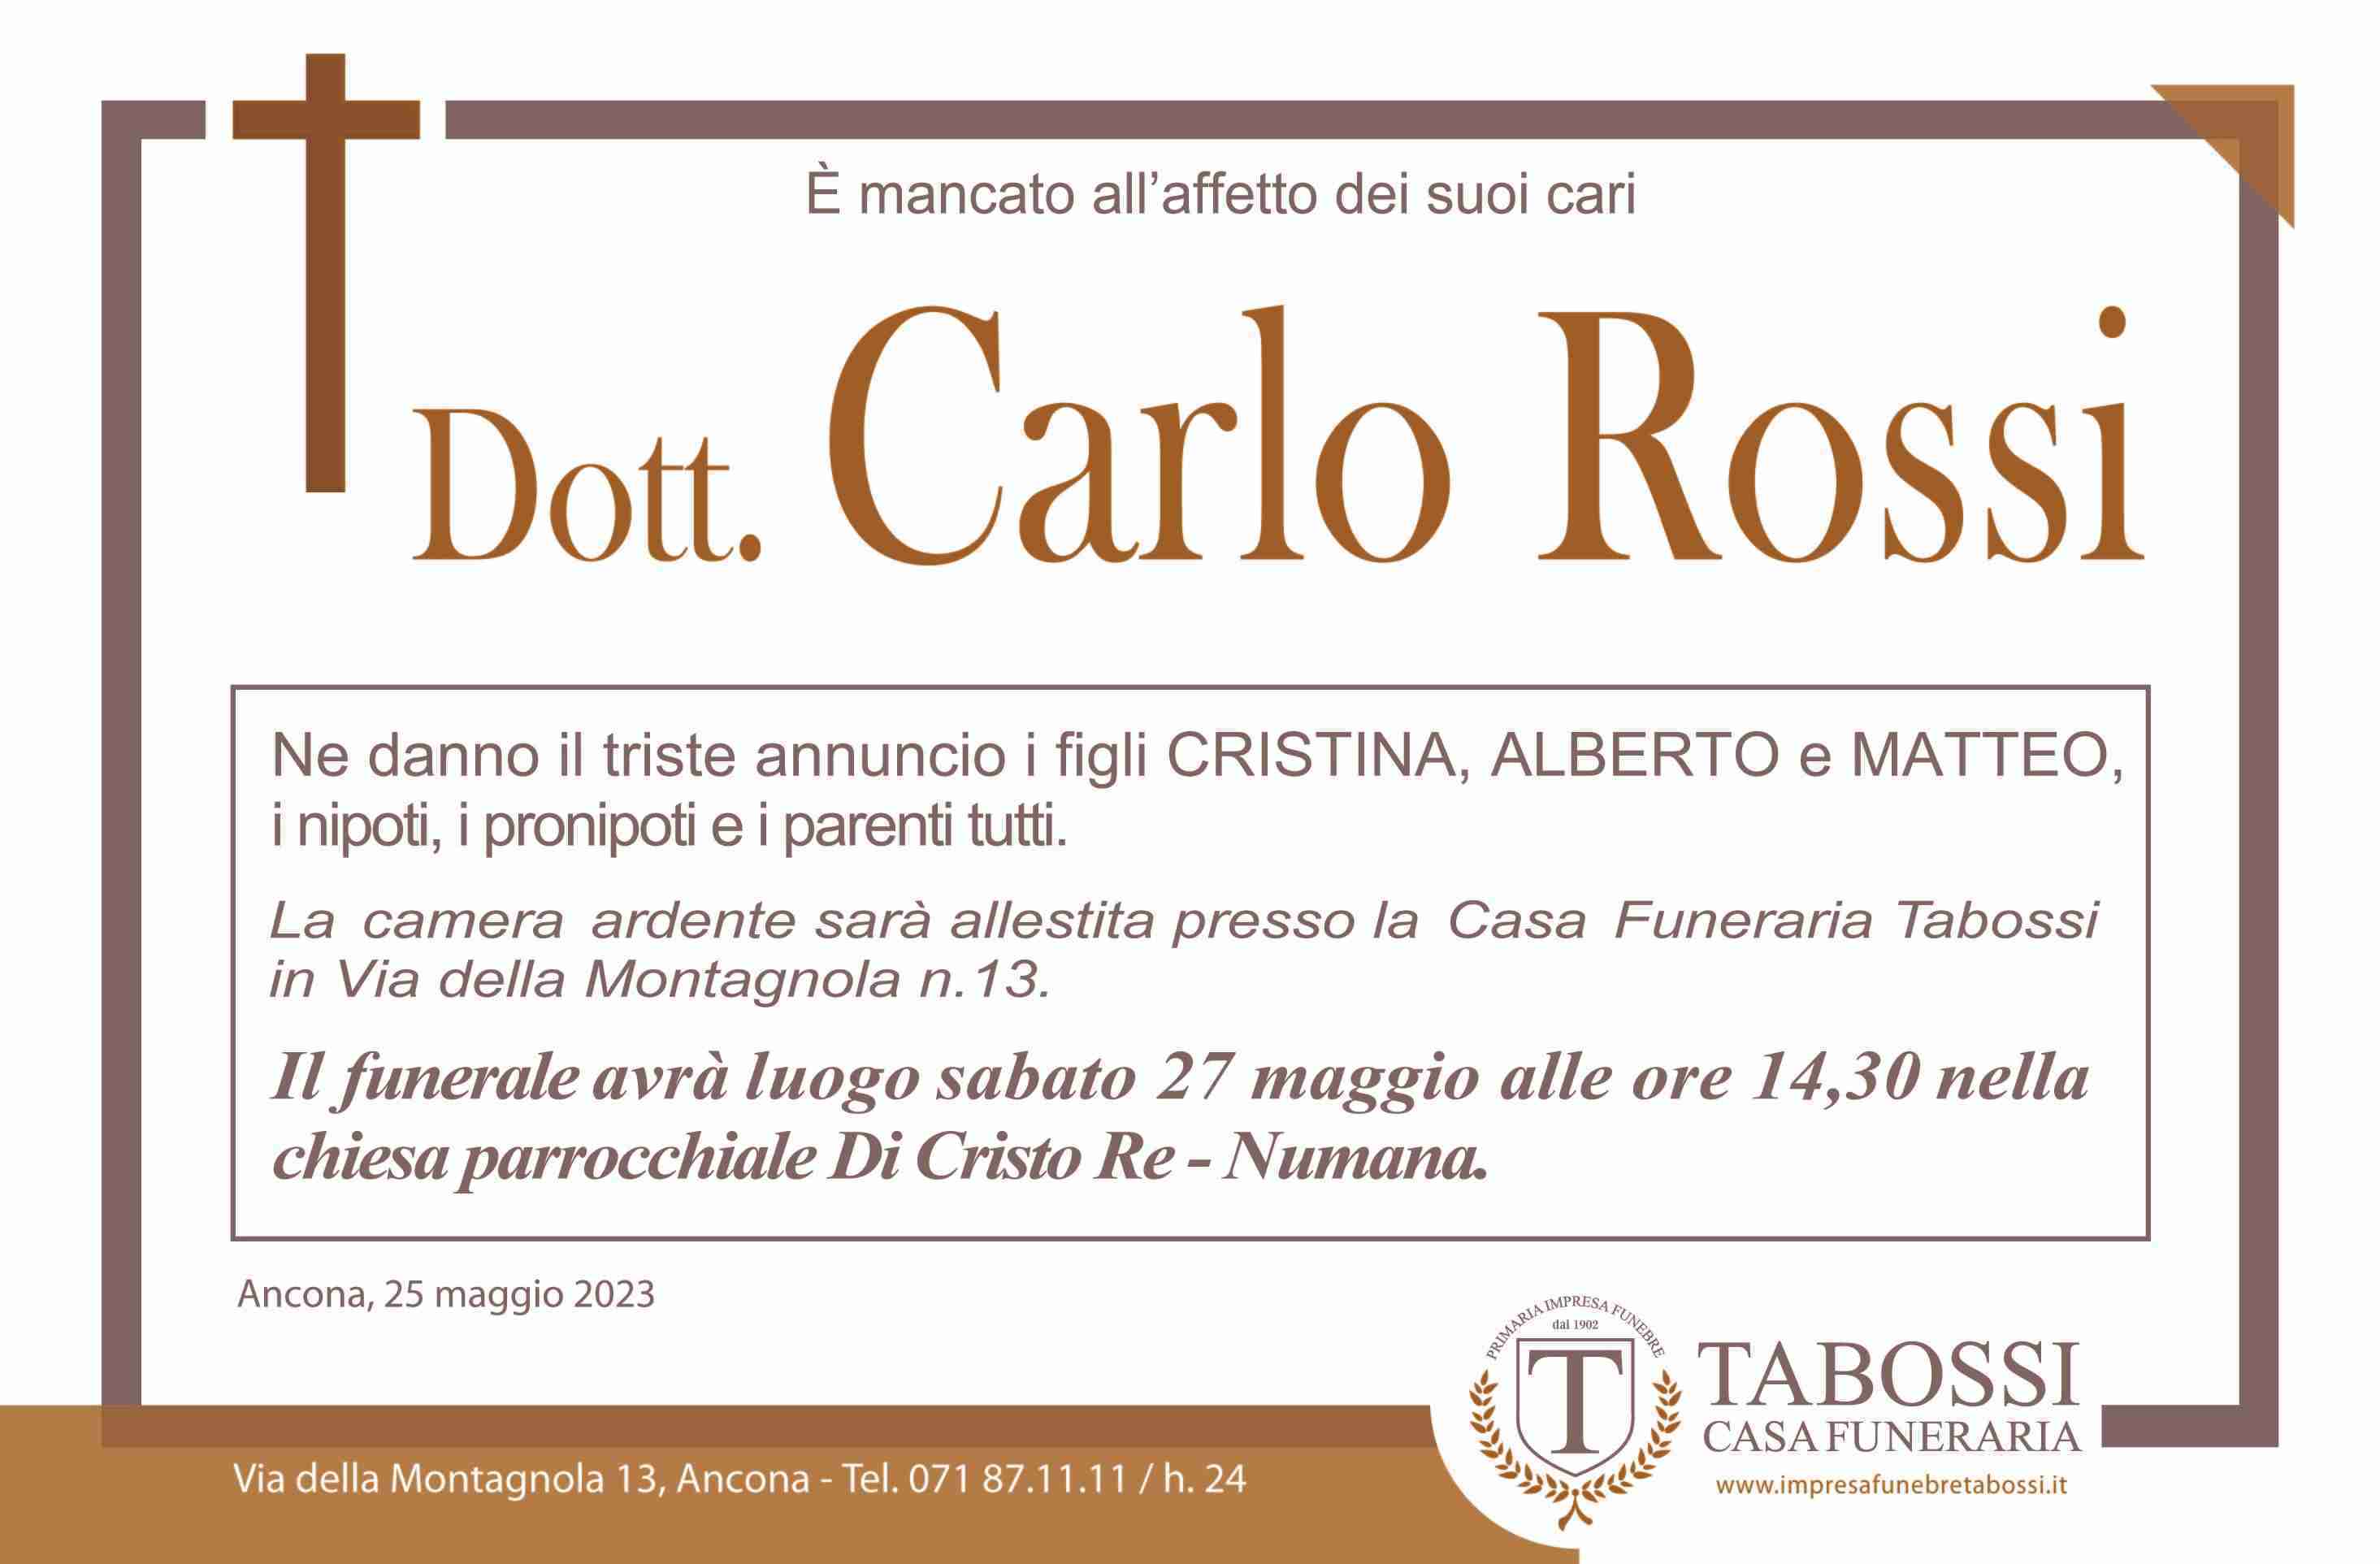 Dott. Carlo Rossi